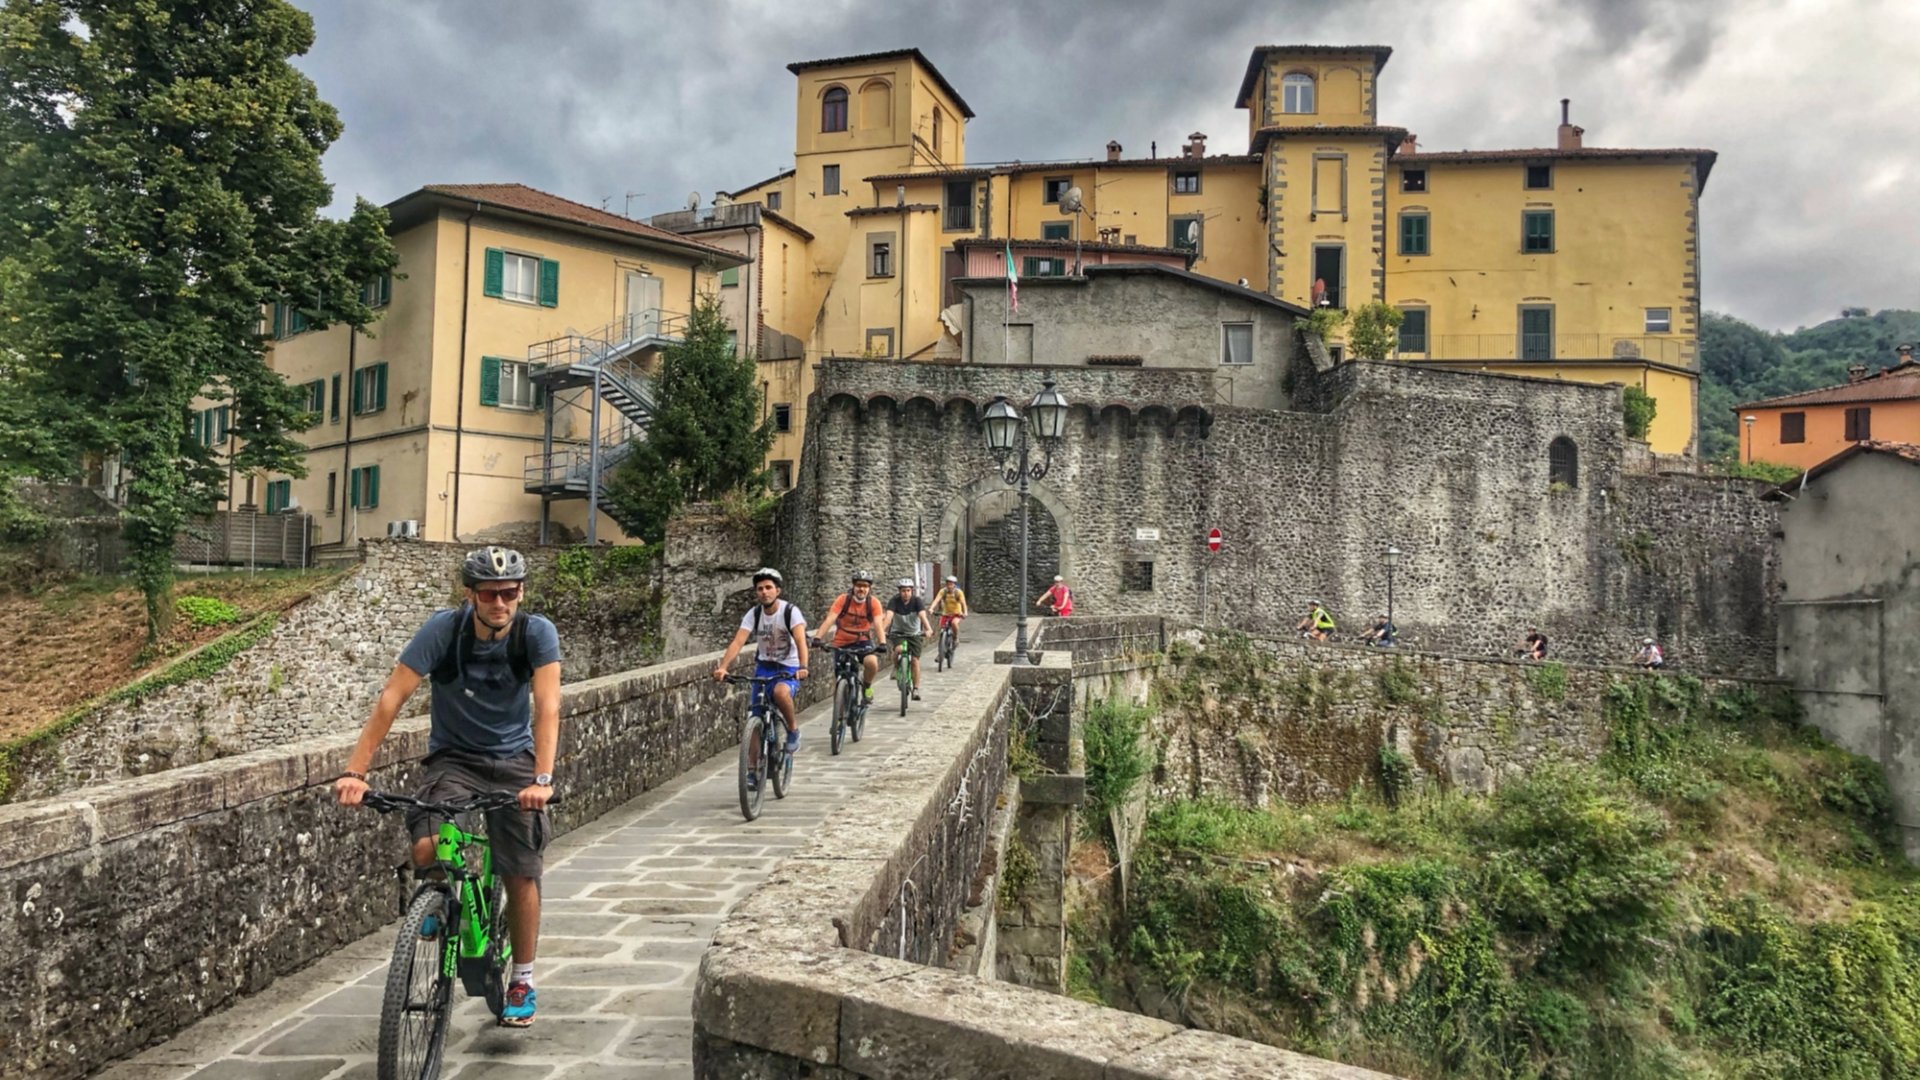 Garfagnana e-bike tour in Tuscany